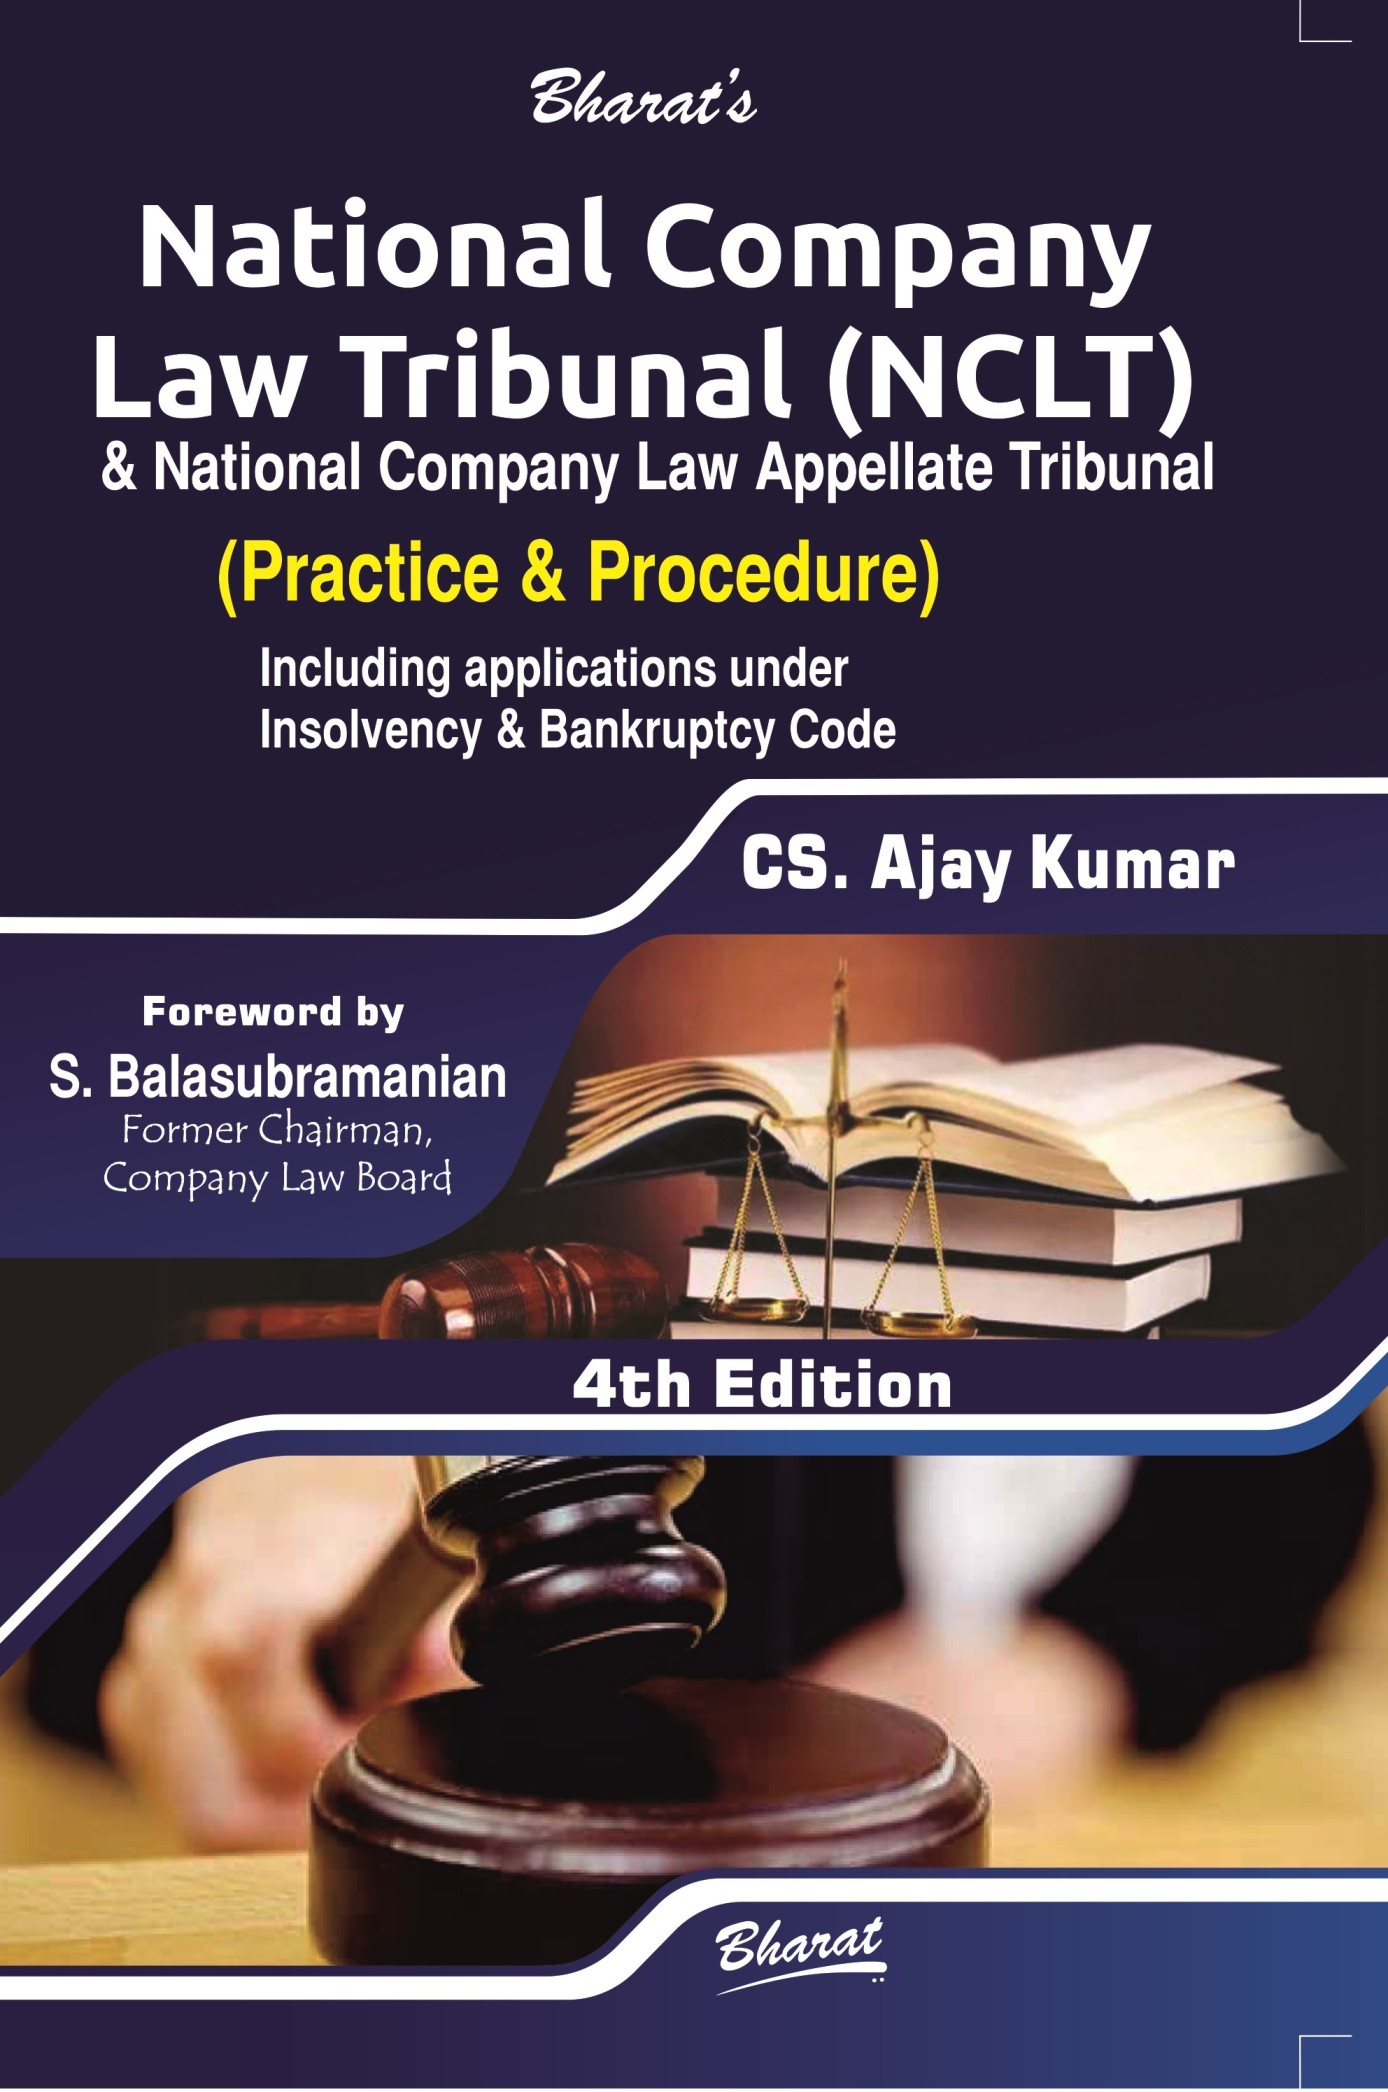 NATIONAL COMPANY LAW TRIBUNAL (Practice & Procedure)